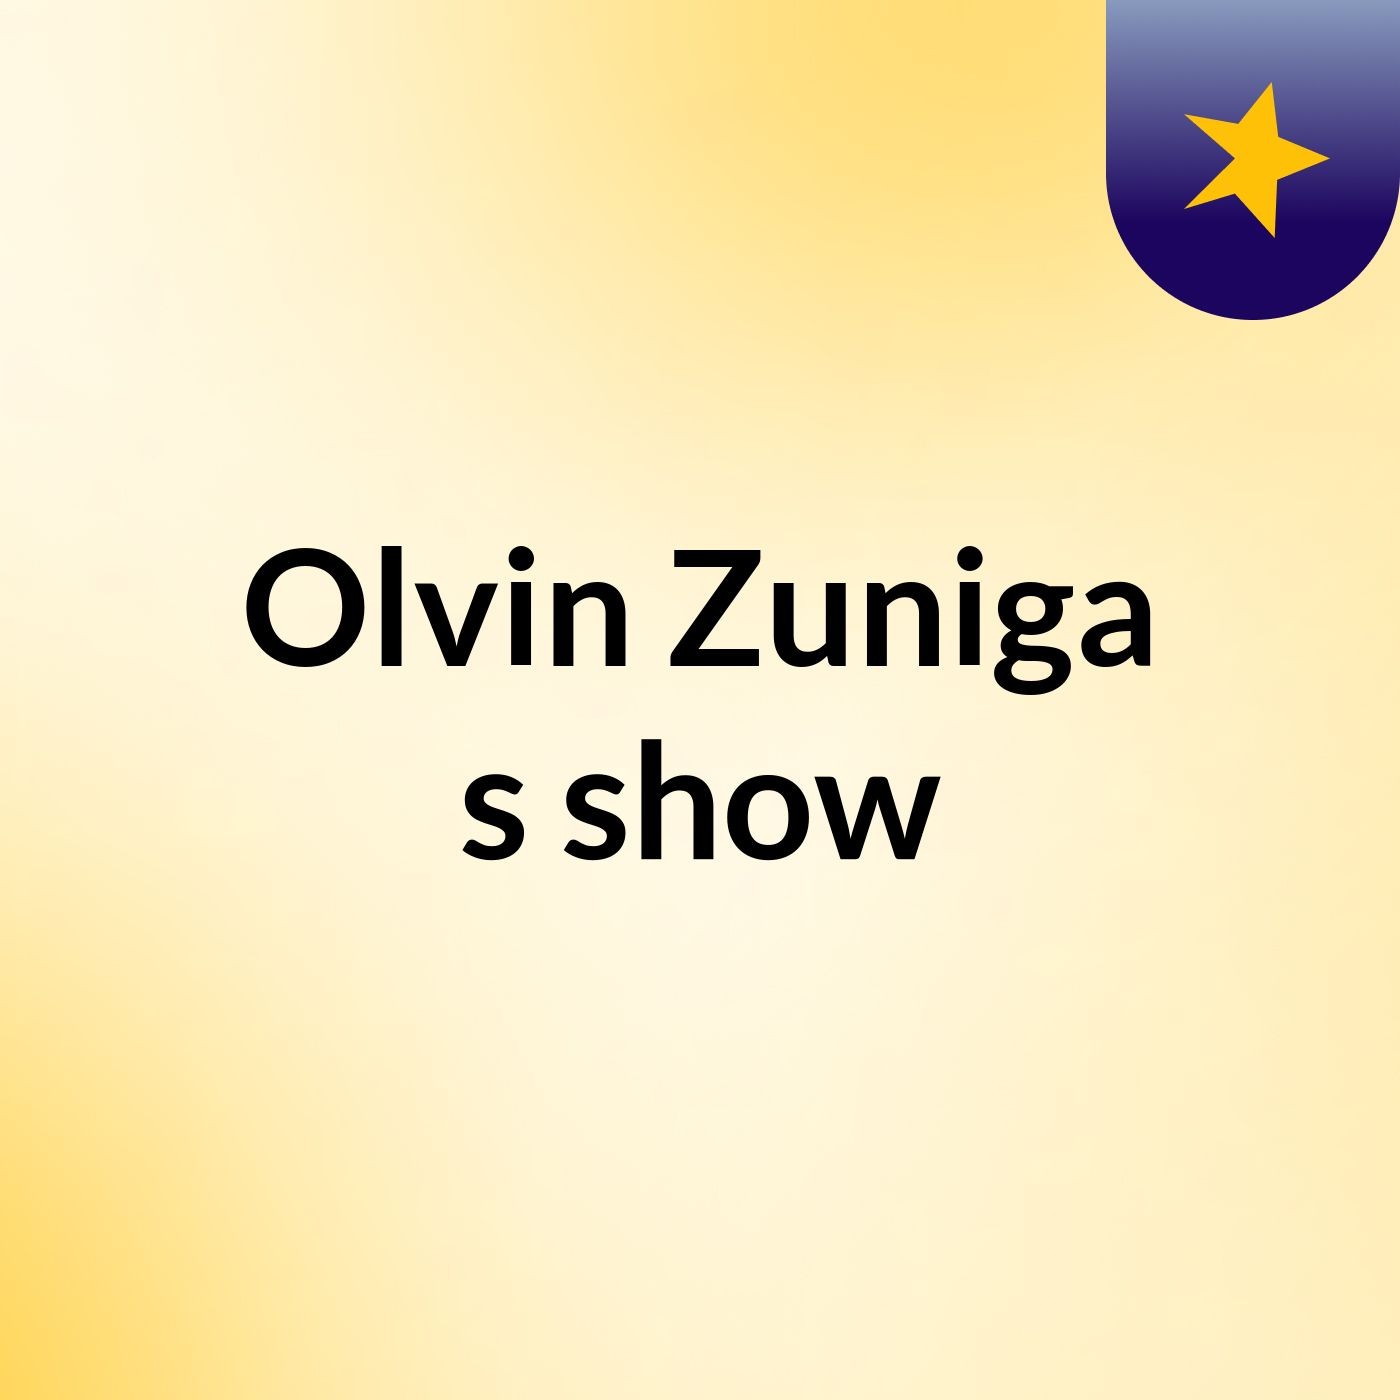 Olvin Zuniga's show